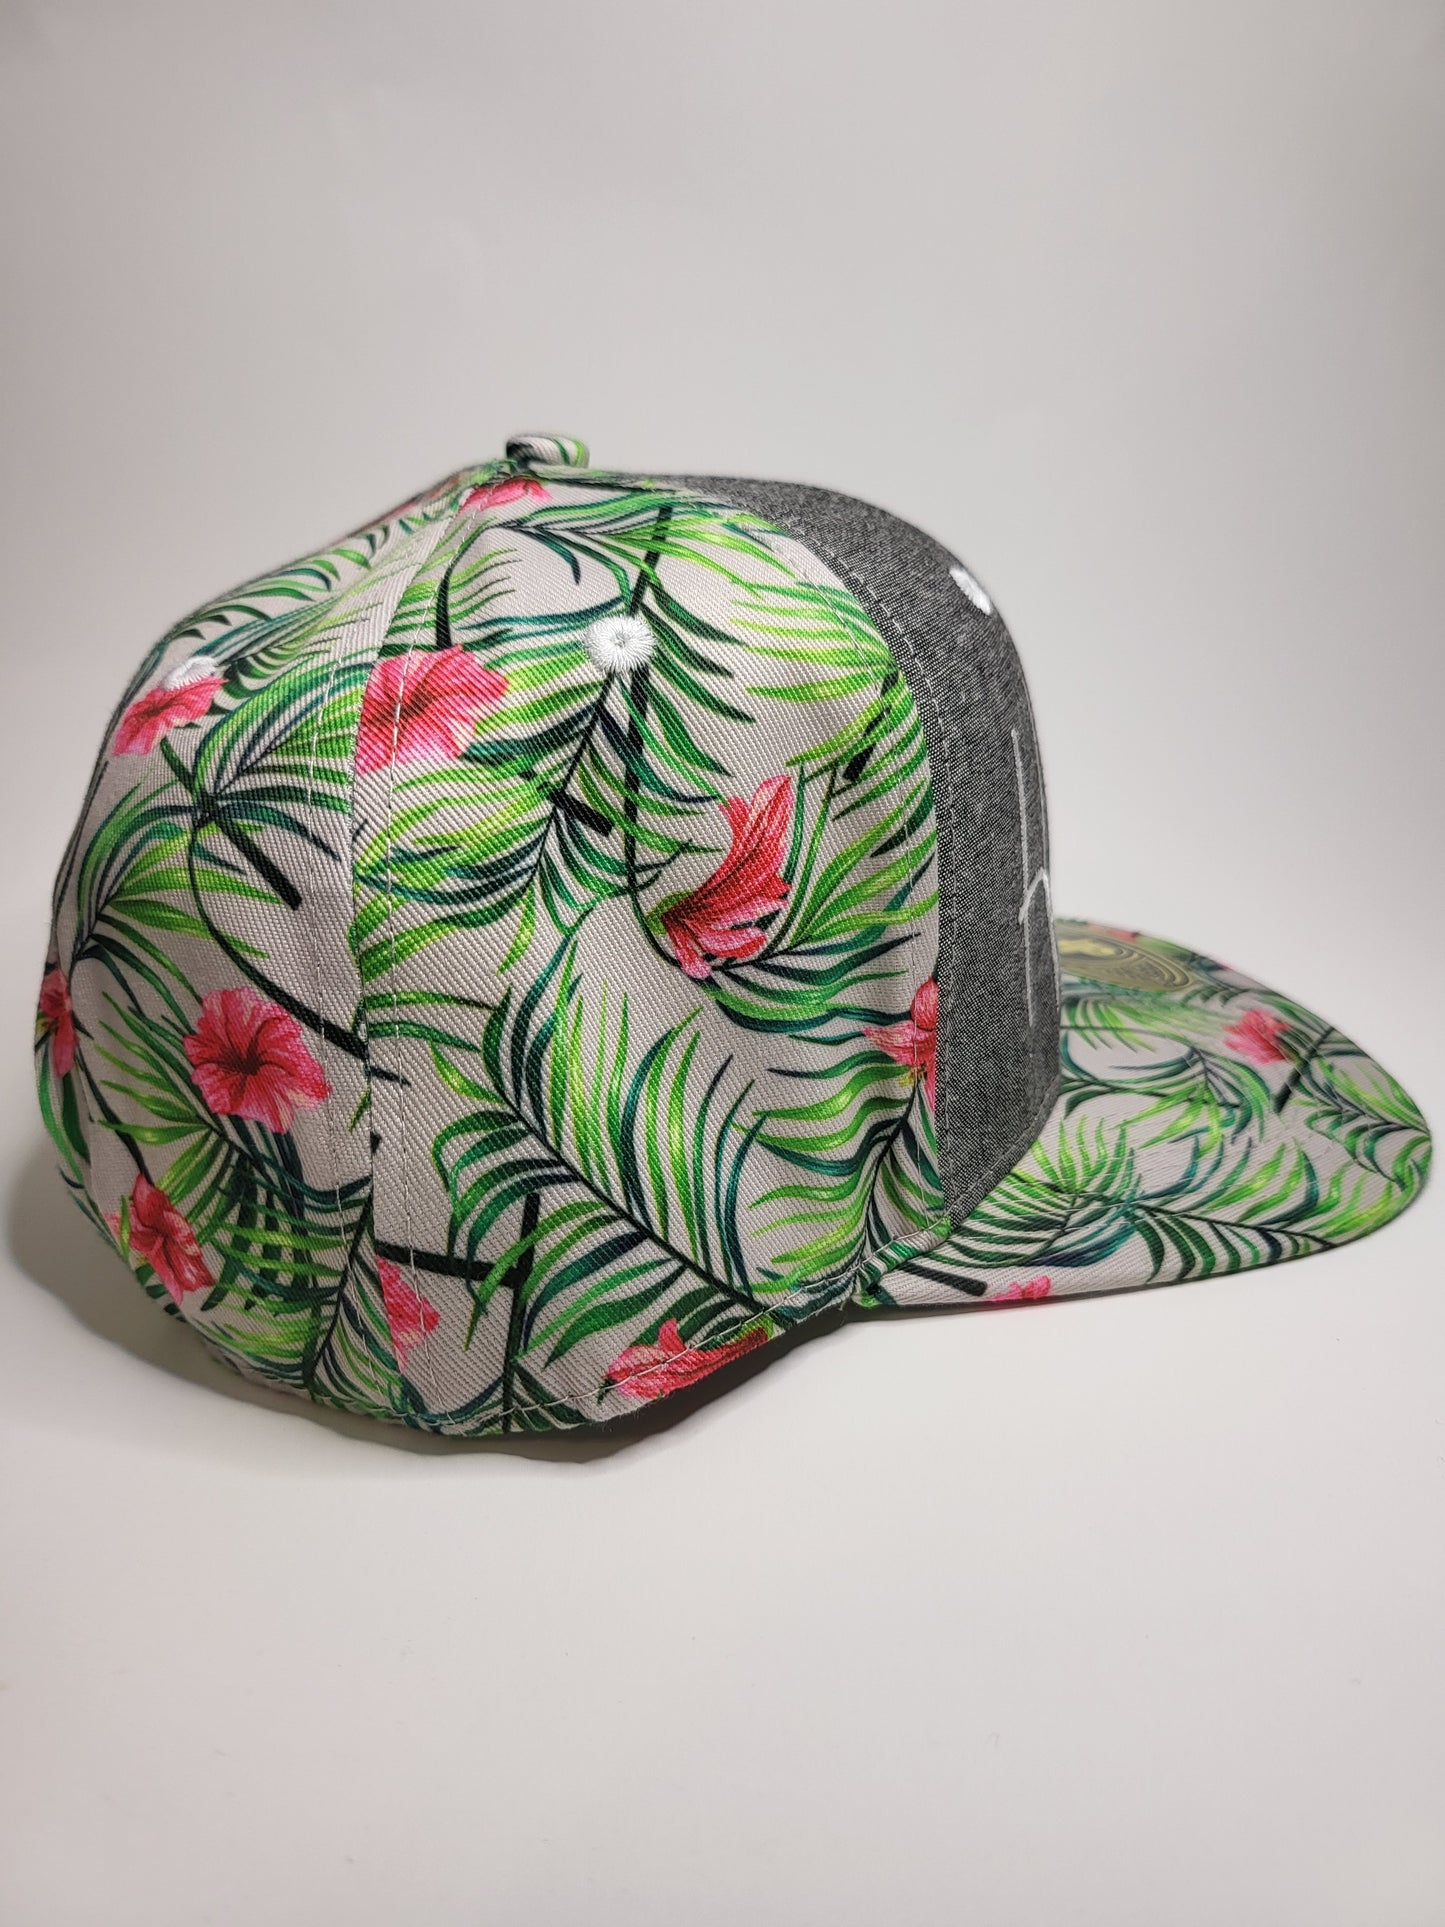 Hats "Denim & Floral" Flatbill Snapback